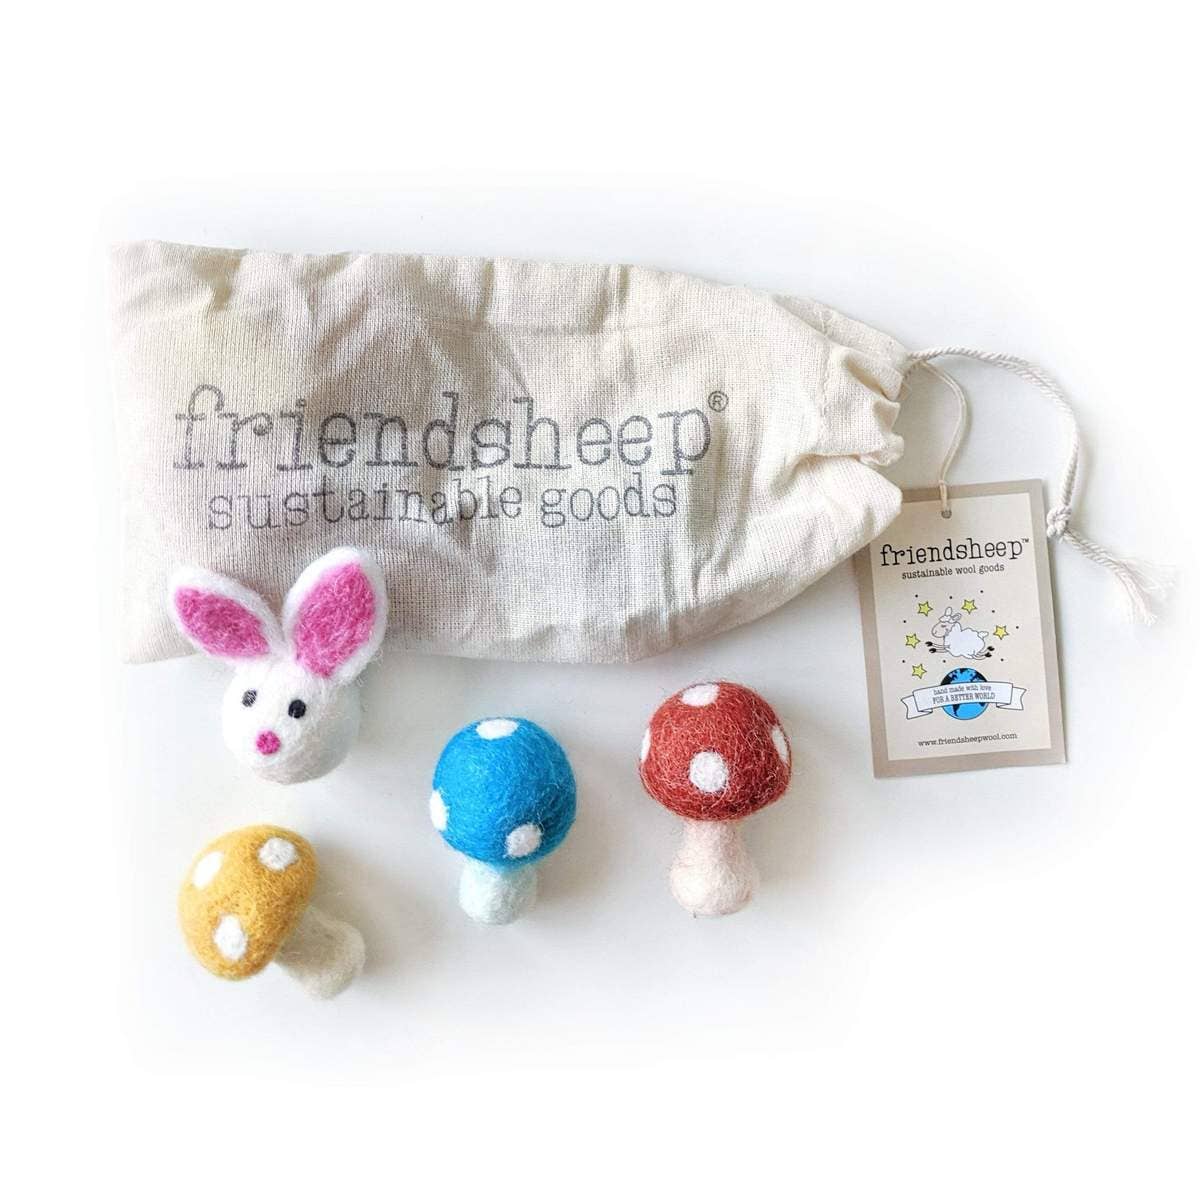 Friendsheep - Enchanted Forest Eco Toys - Set of 4